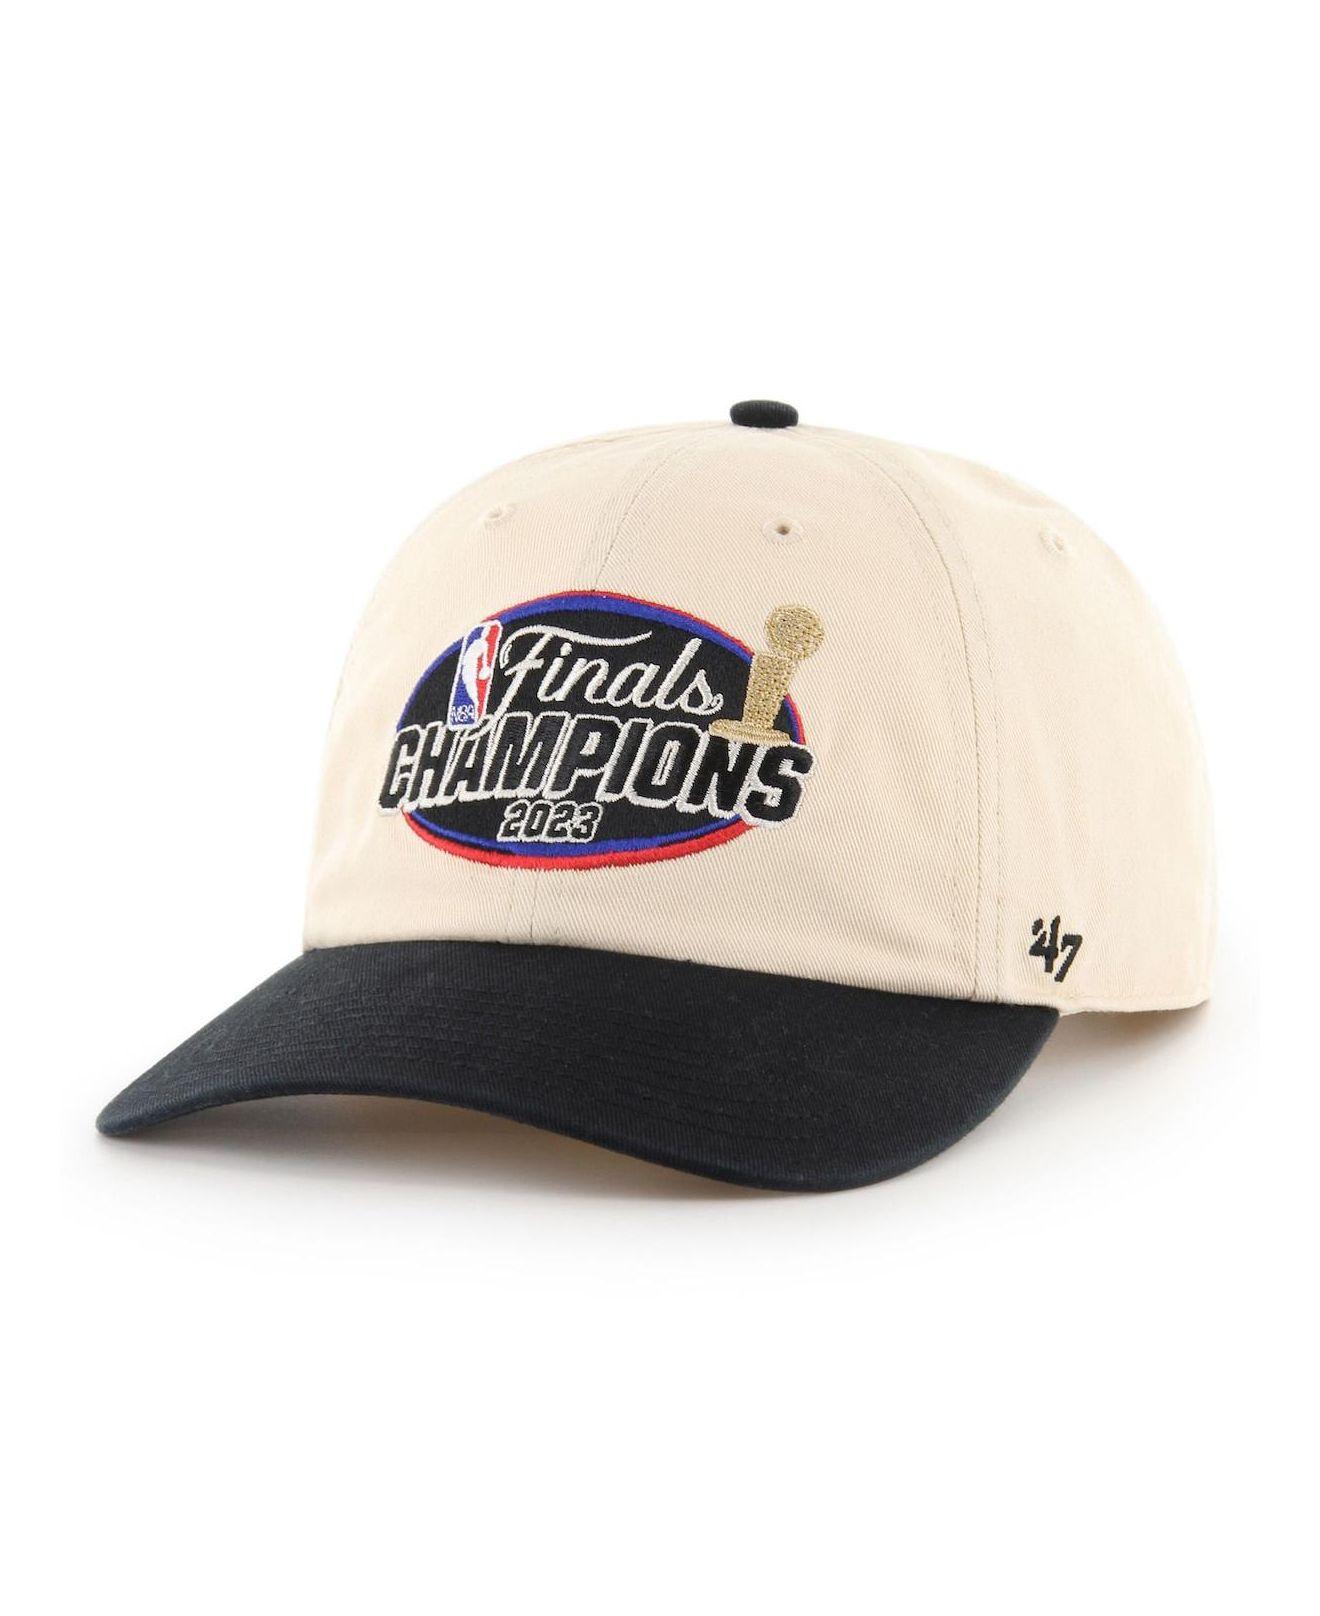 nuggets champions hat